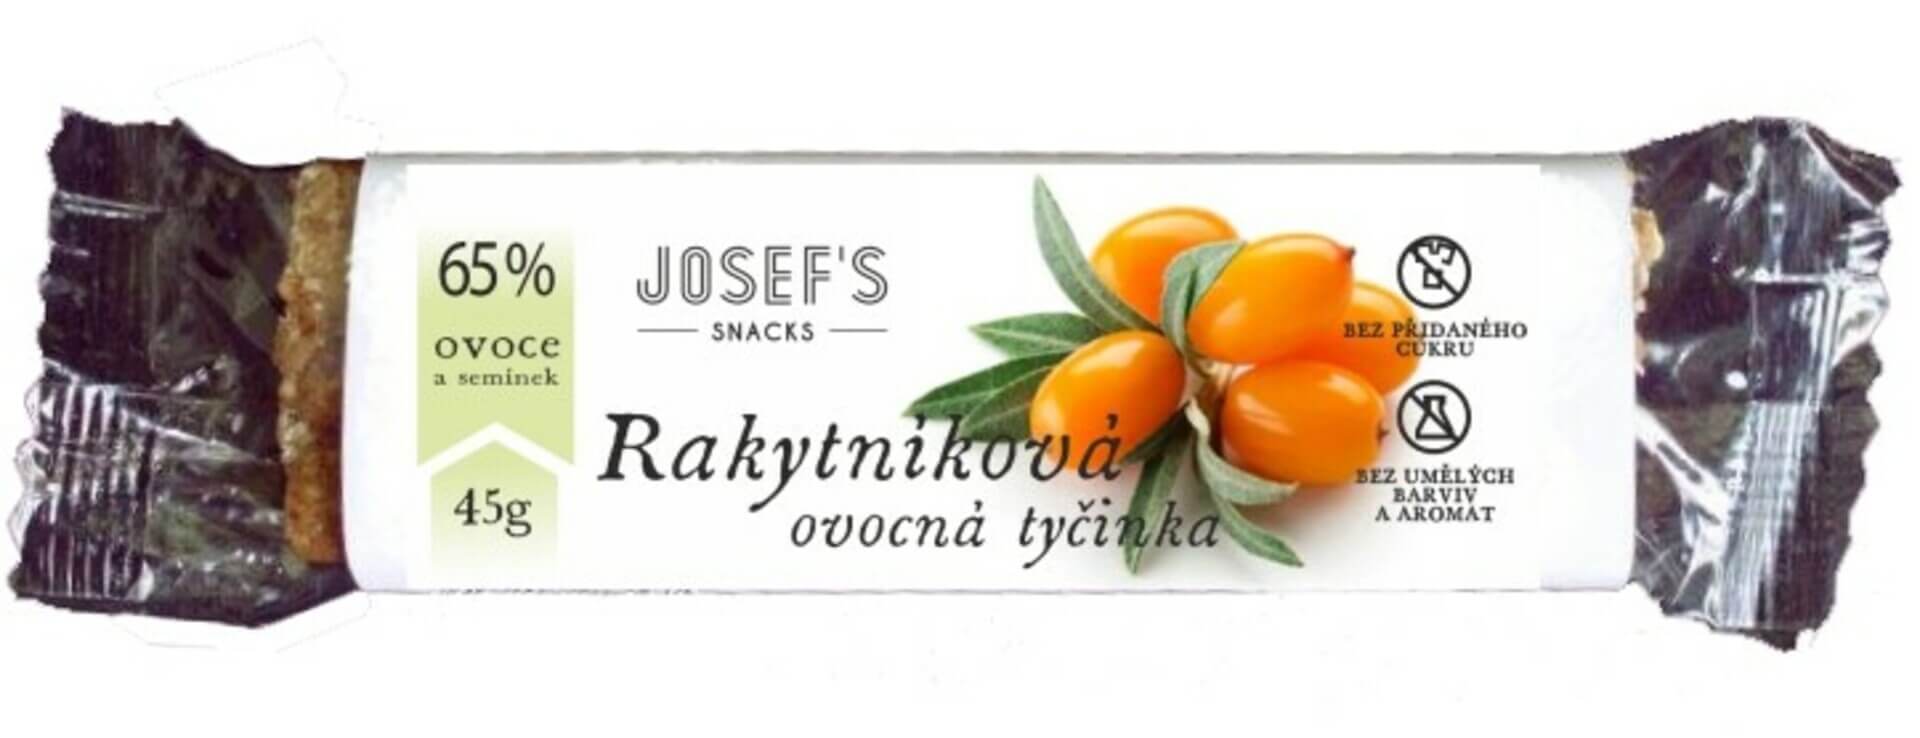 E-shop Josef 's snacks Ovocná Rakytníková tyčinka 45 g